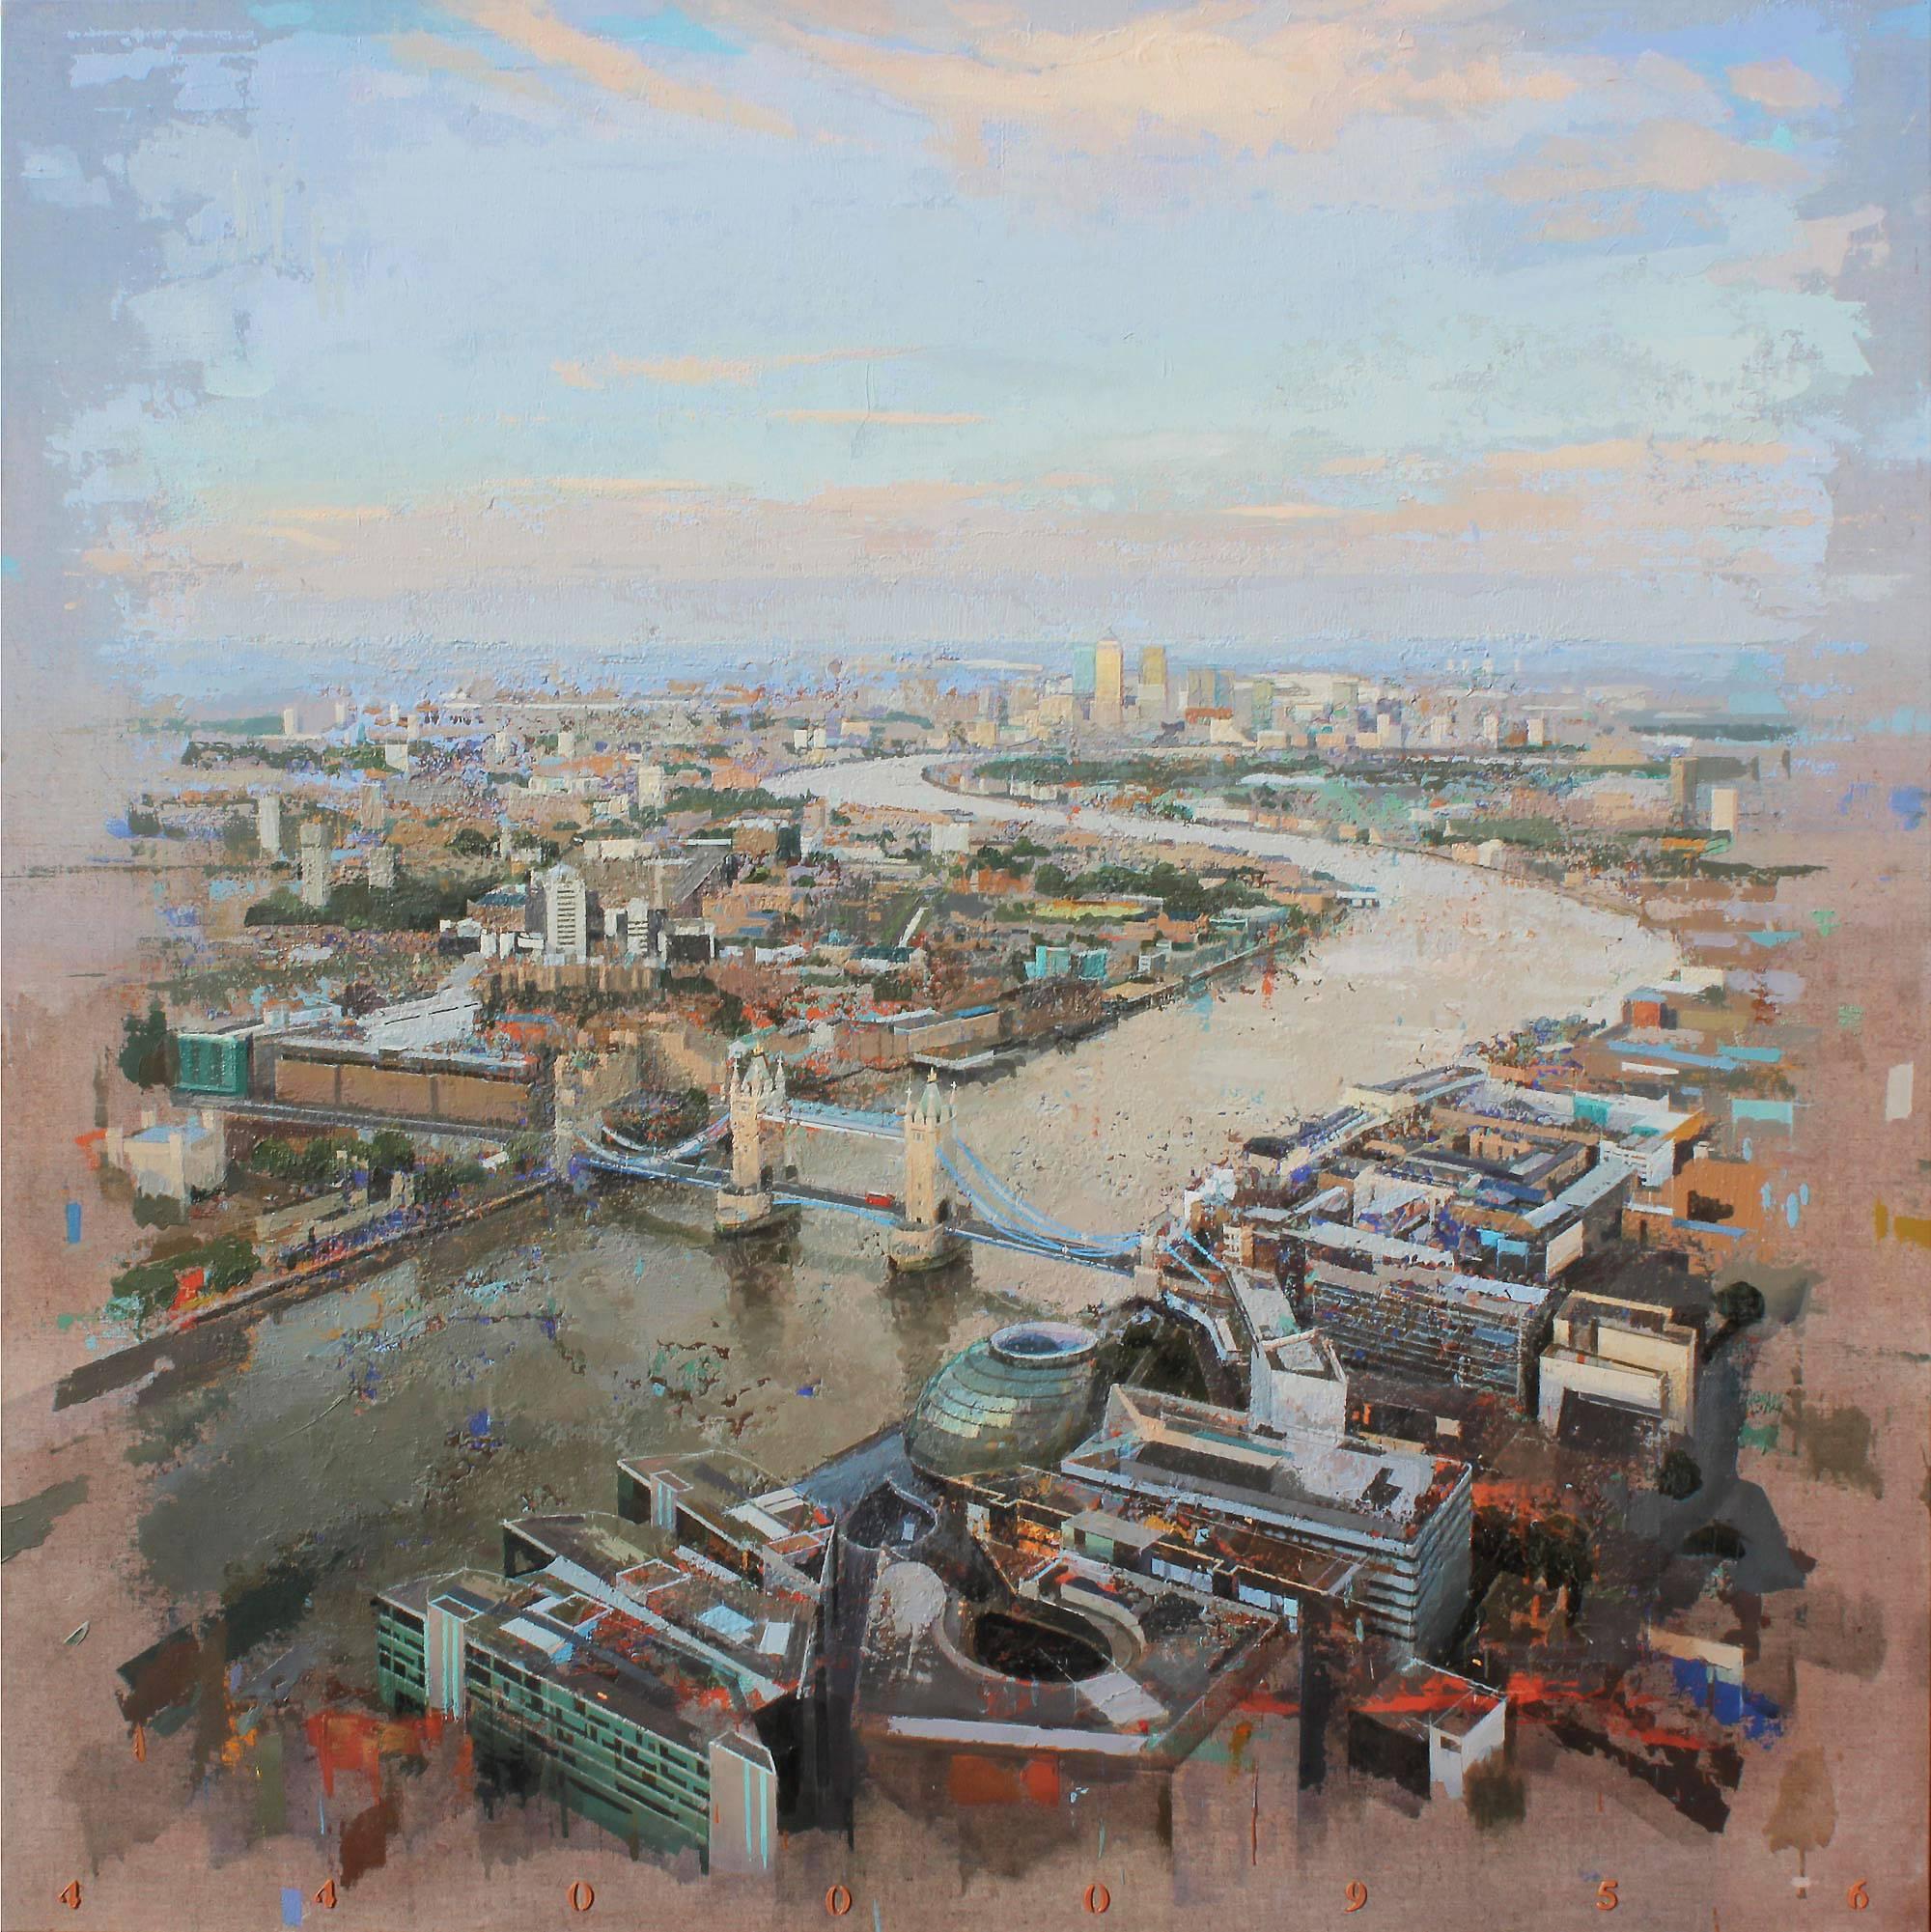 London Bridge - Original Painting on Linen, Areal View, Bridge and River Thames